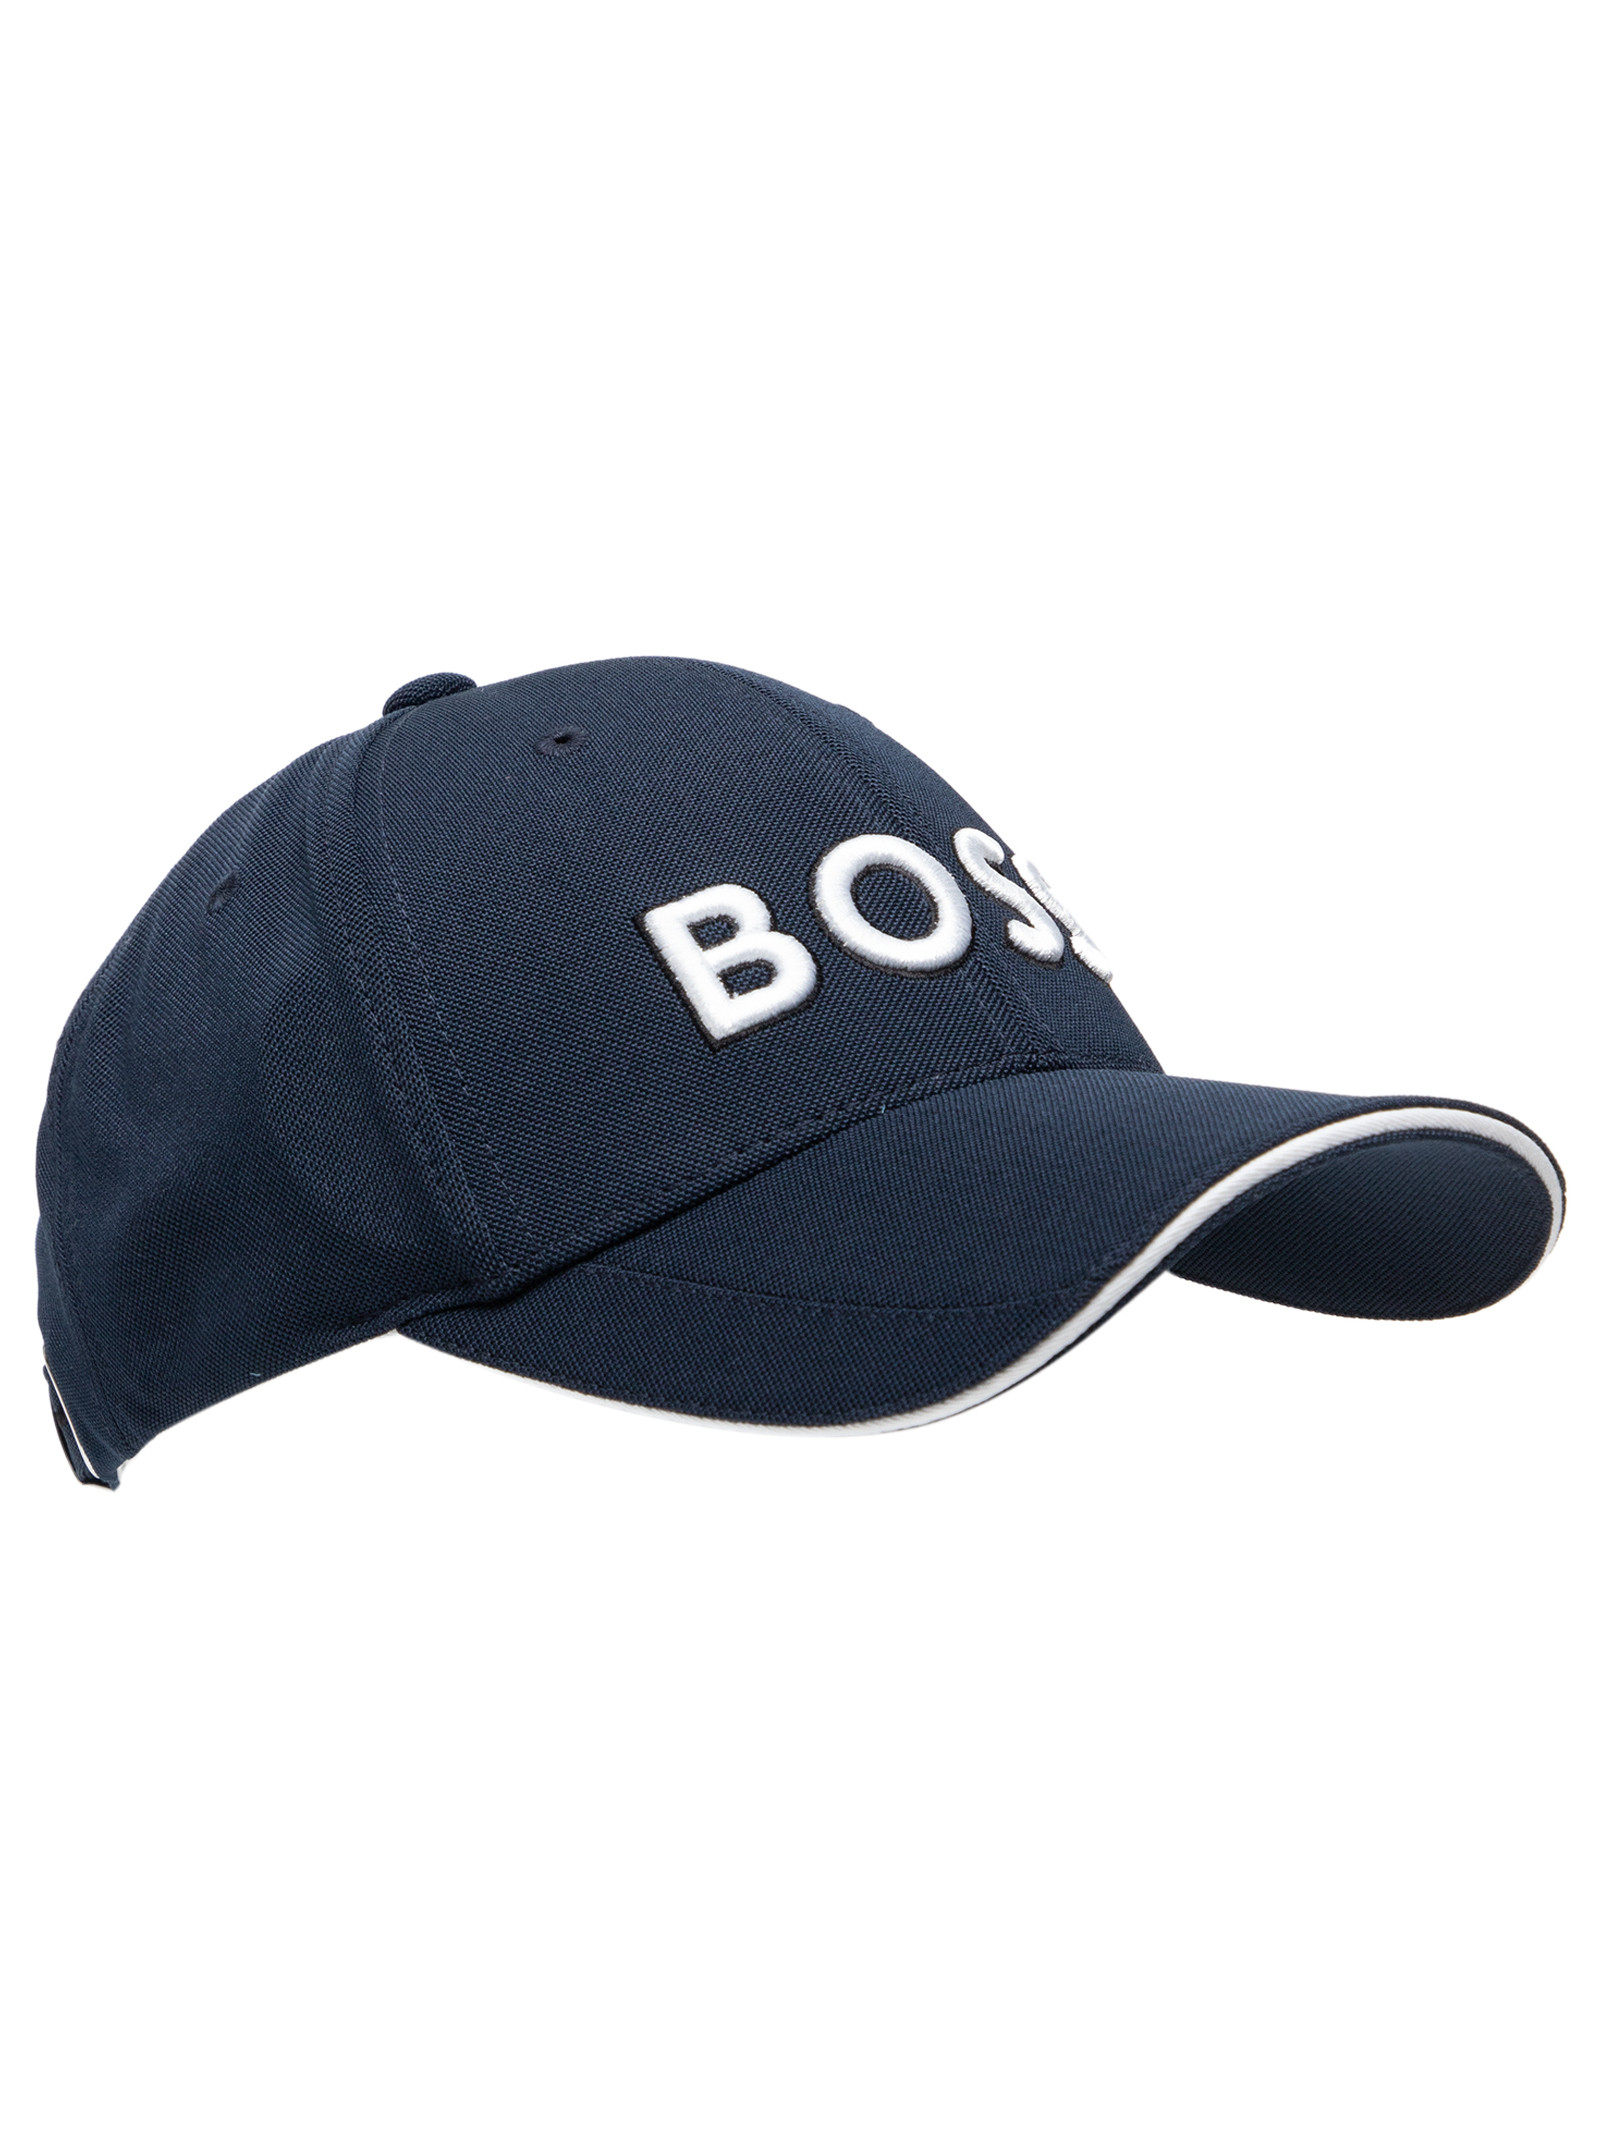 Boné Masculino Trucker Hat - The North Face - Azul - Shop2gether